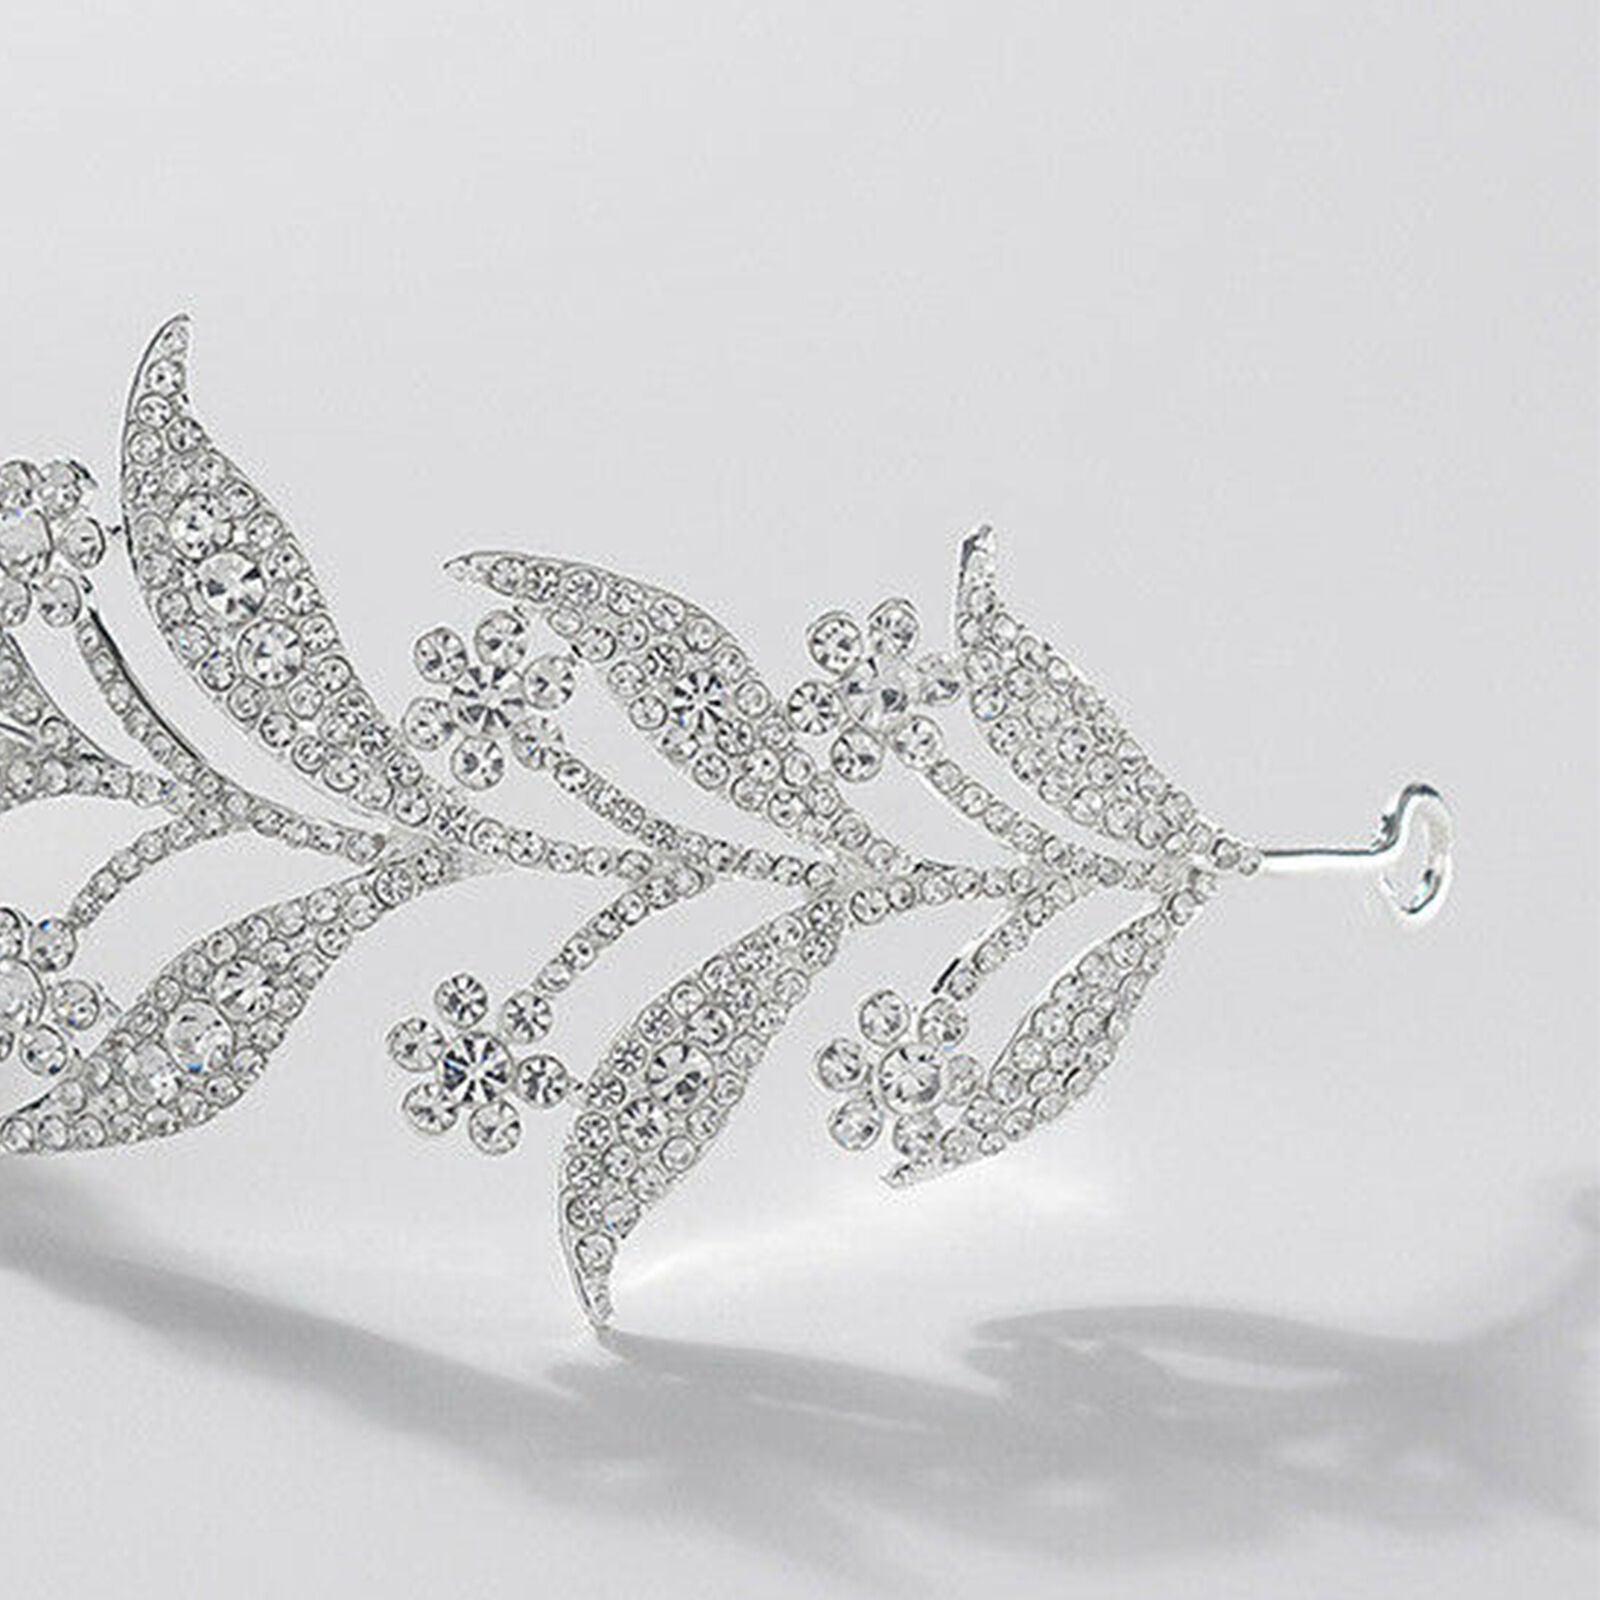 4.5cm Wide Big Leaves Crystal Wedding Bridal Party Pageant Prom Tiara Crown